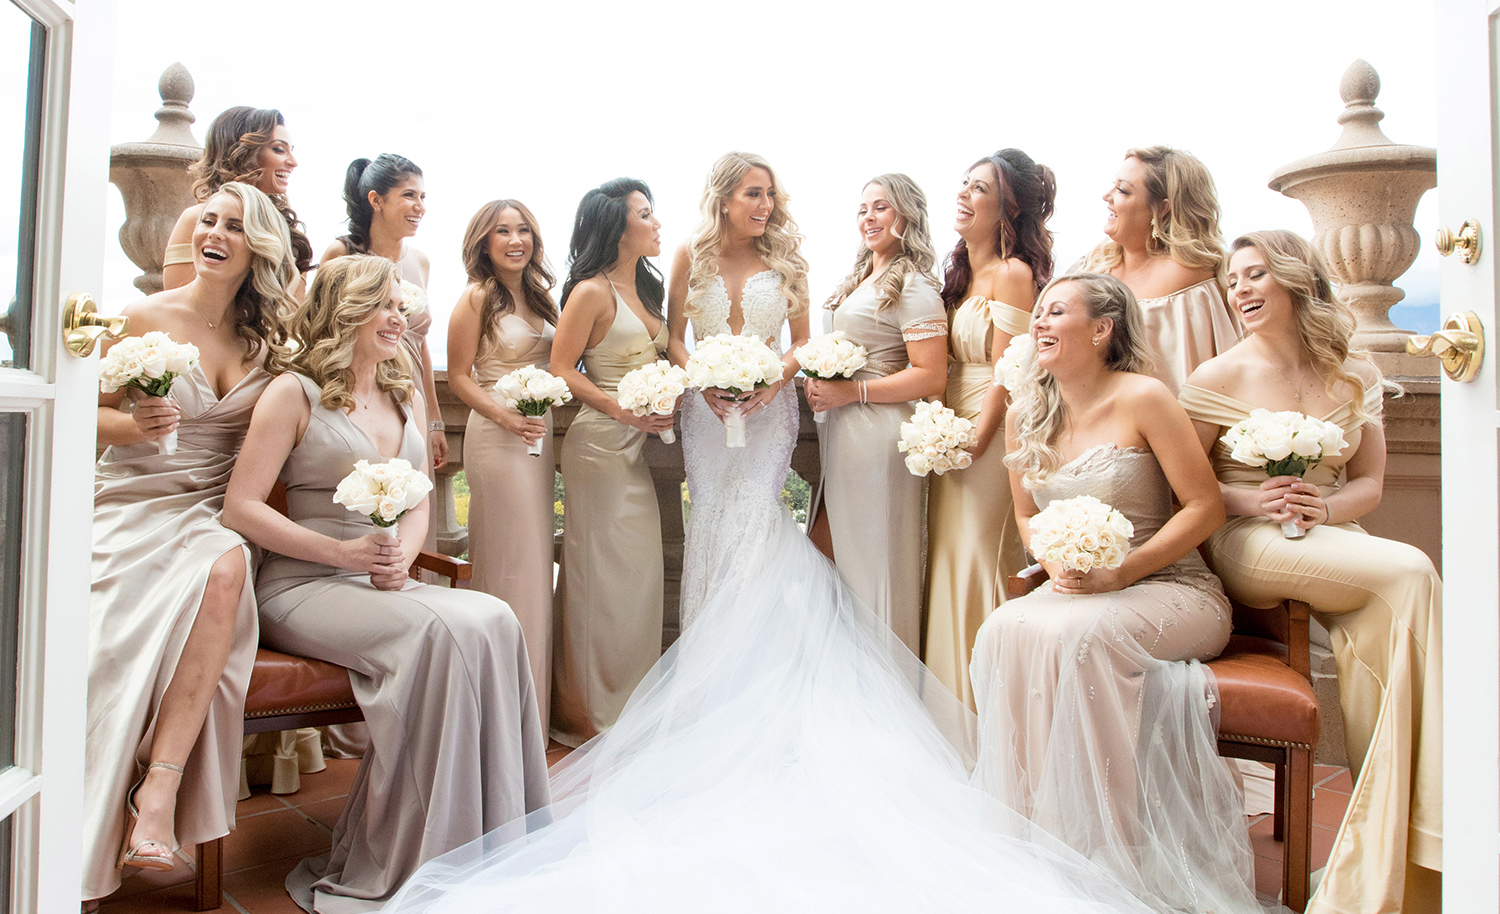 The Best Sites for Bridesmaid's Dresses - Brides of LI